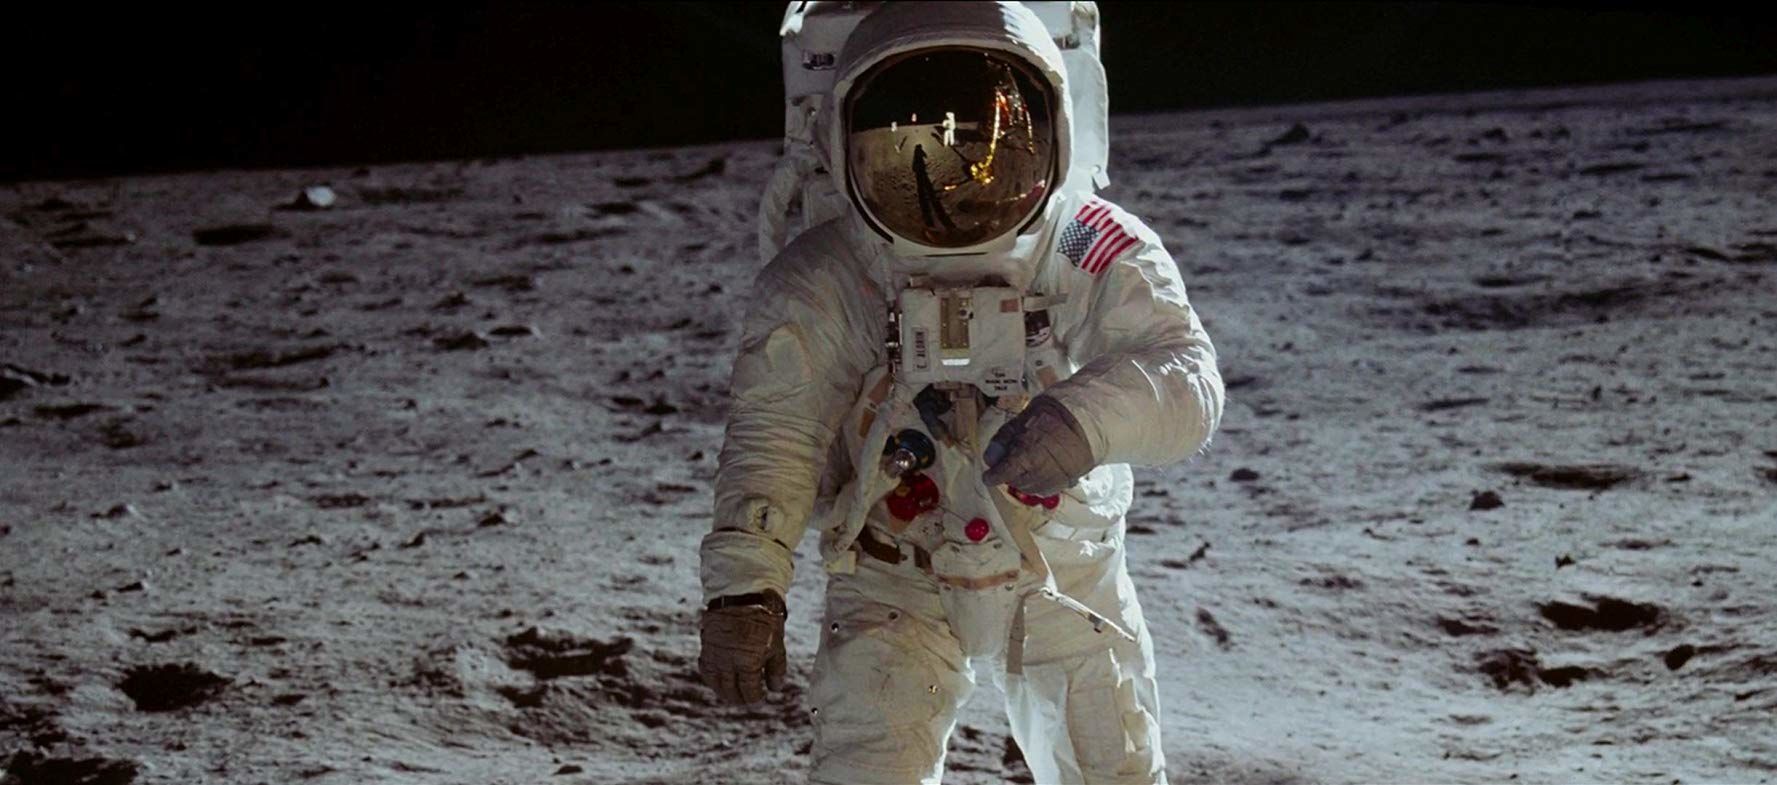 Apollo 11 feature documentary 2019